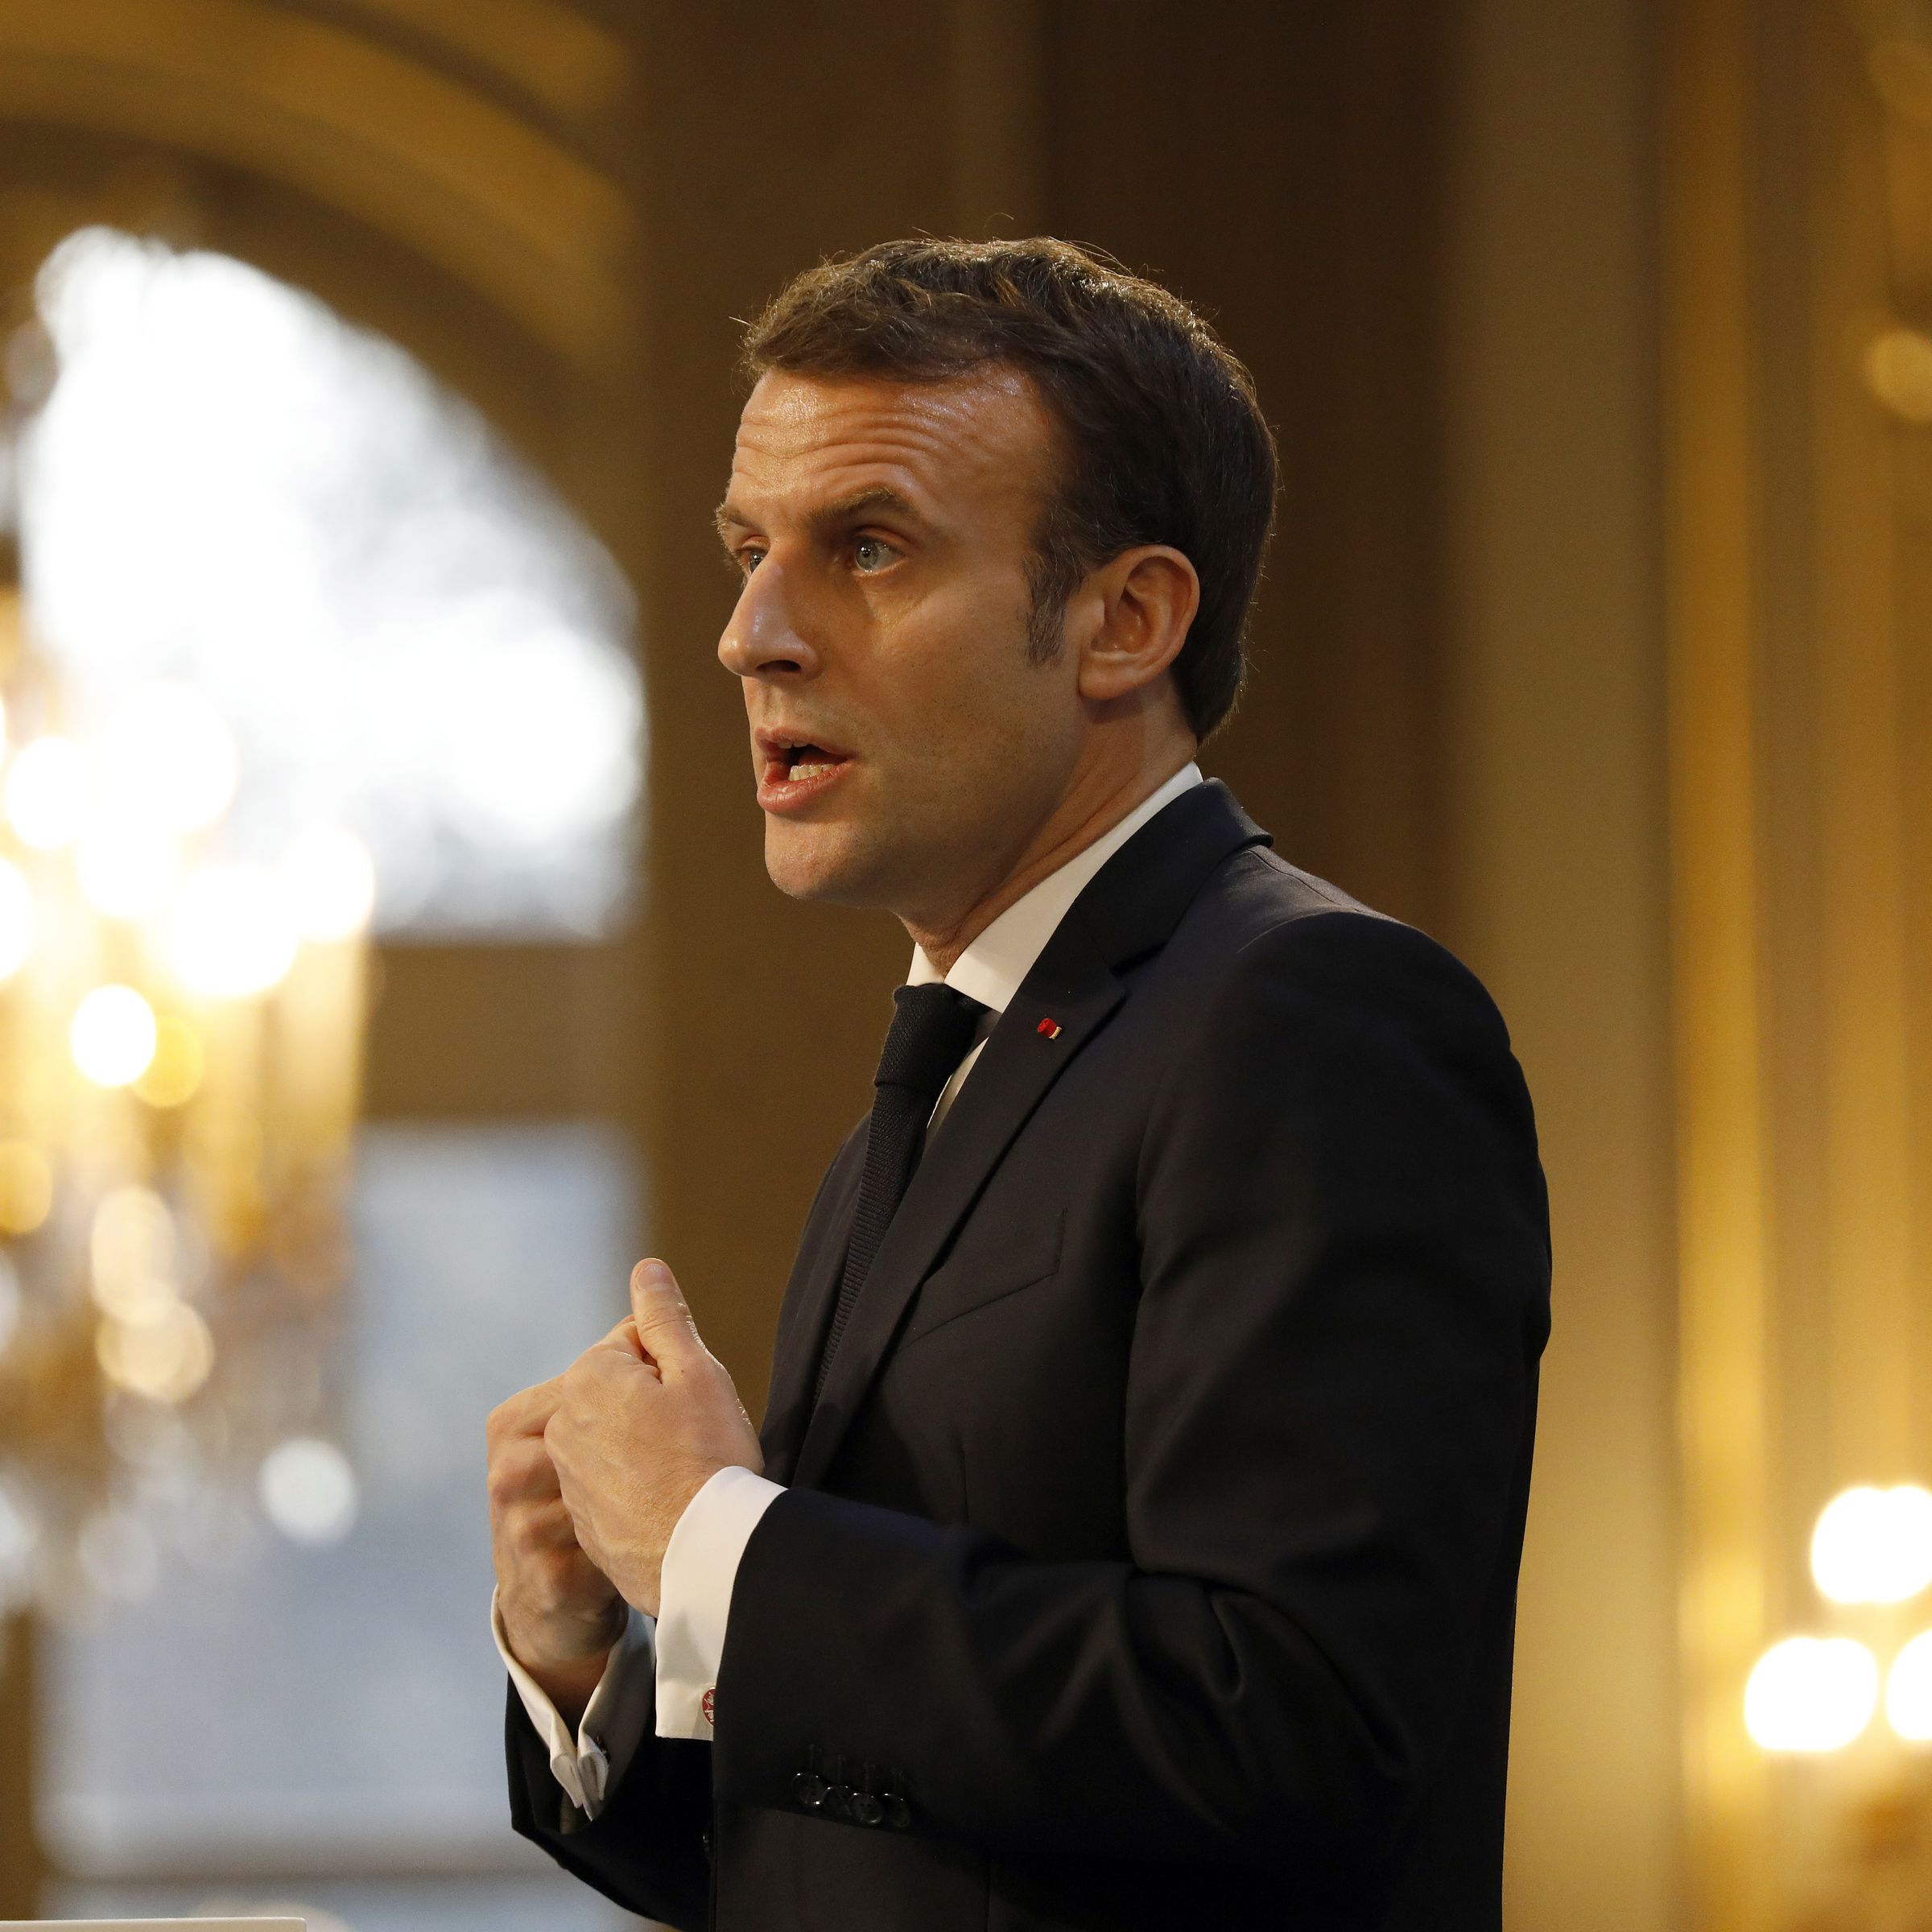 Macron Addresses Business Leaders At Elysee Palace